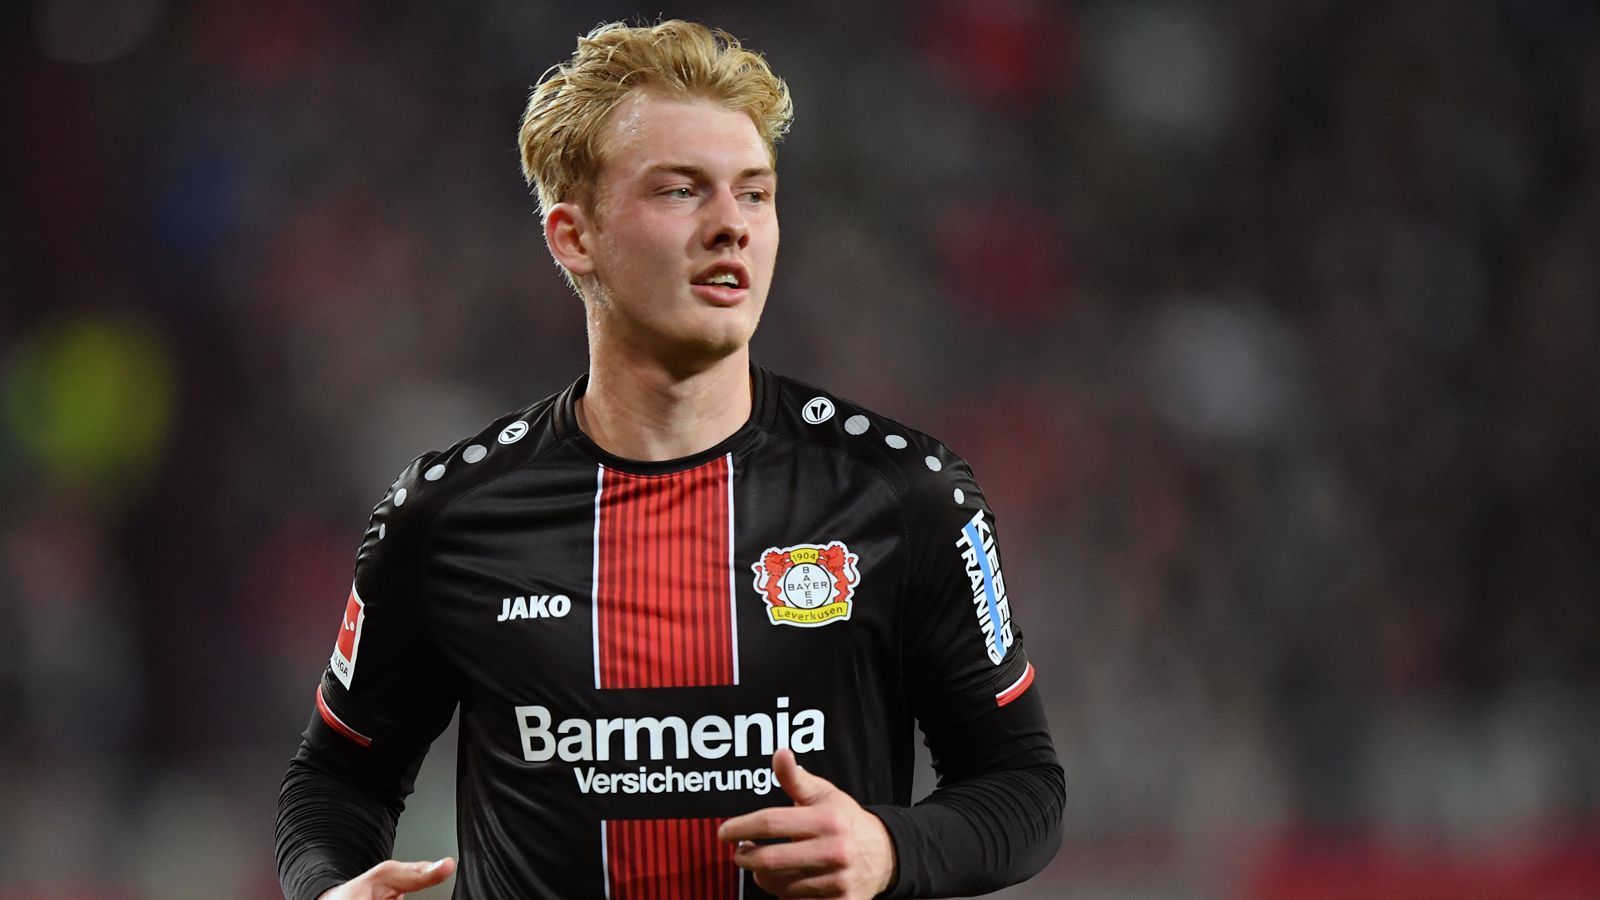 
                <strong>Platz 16 - Julian Brandt (Bayer Leverkusen)</strong><br>
                Marktwert: 50 Millionen EuroVertrag bis: 2019 (wechselt zu Borussia Dortmund)Alter: 23 JahrePosition: Linksaußen
              